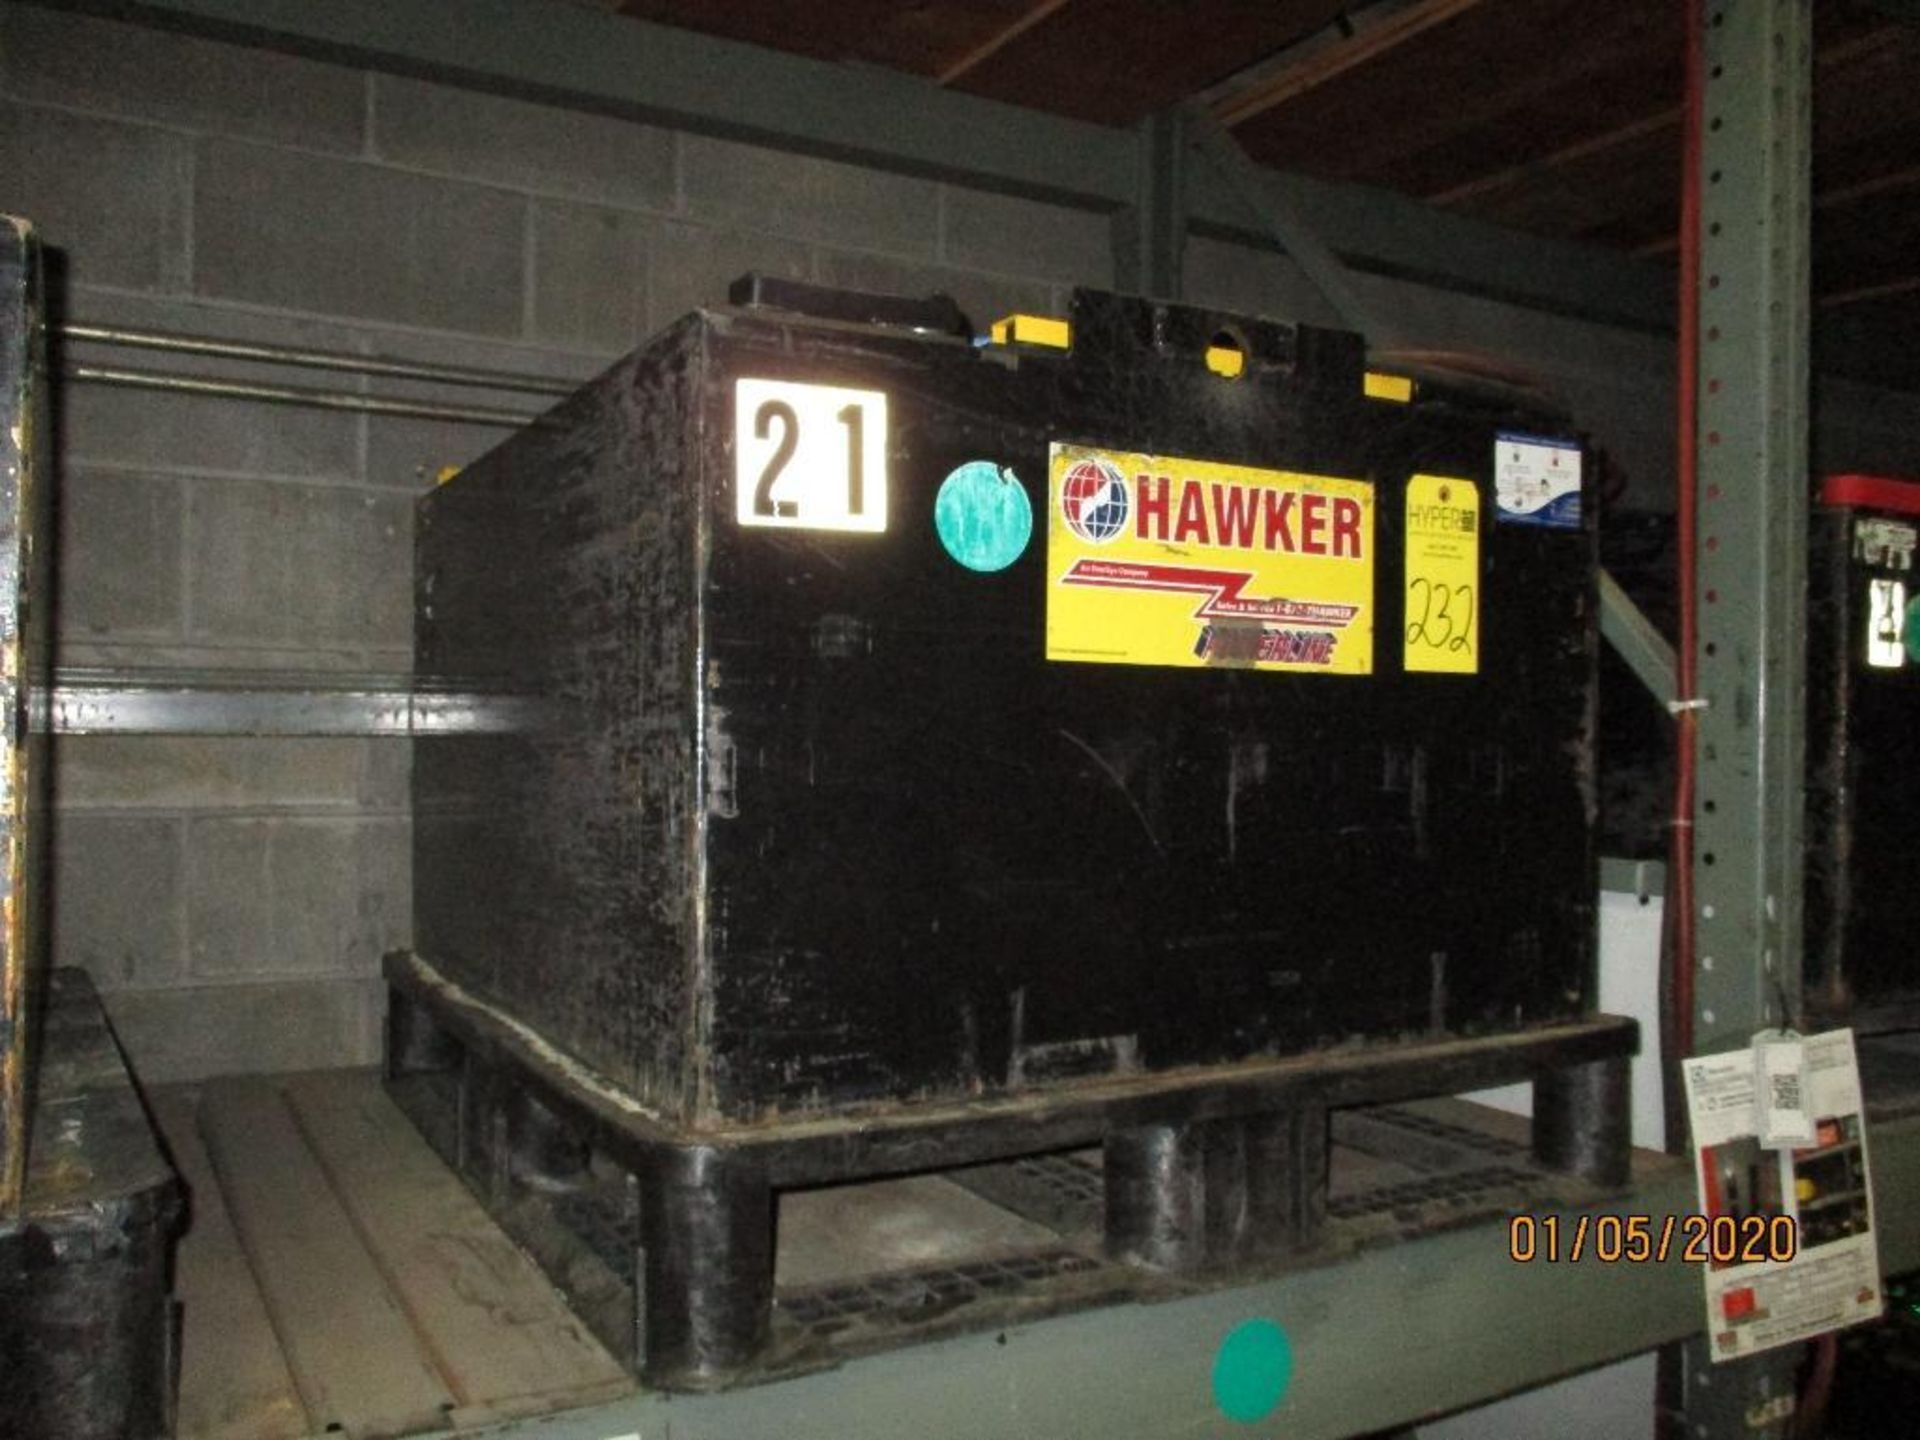 Hawker Forklift Battery (21) 850 Amp Hours, 48v, Type No. 024085F21